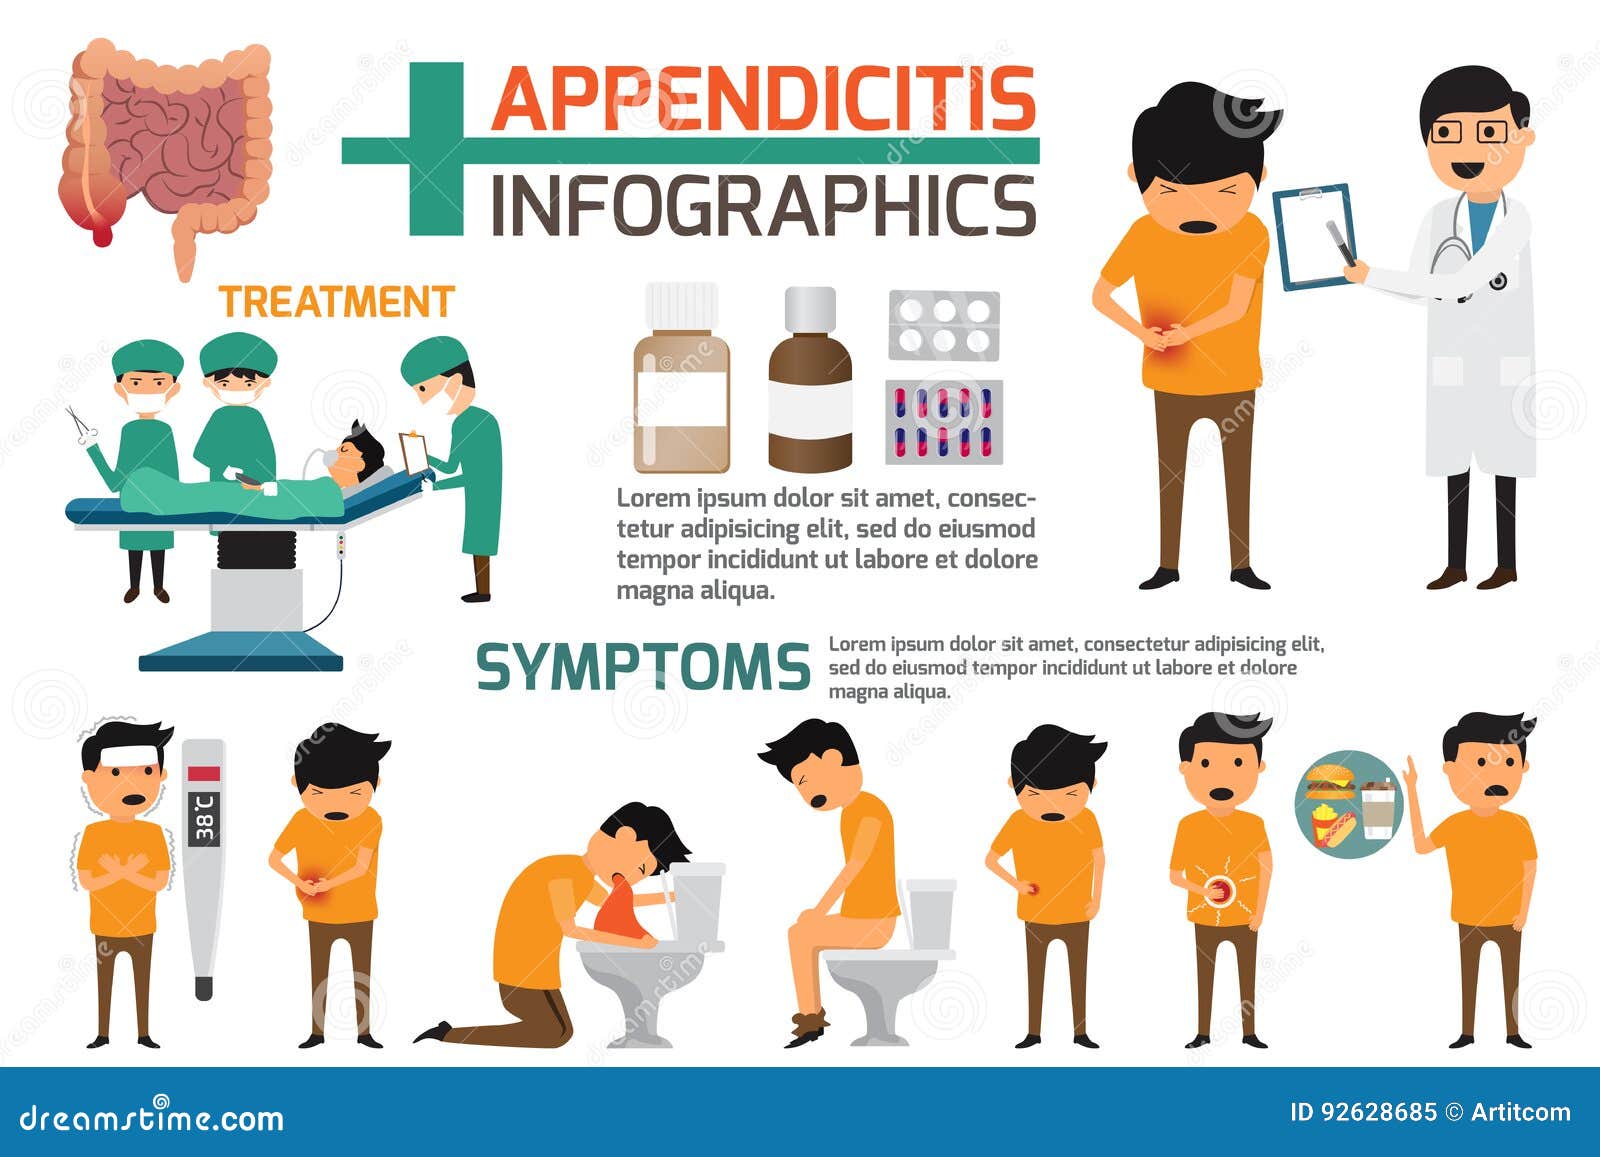 appendicitis infographics .